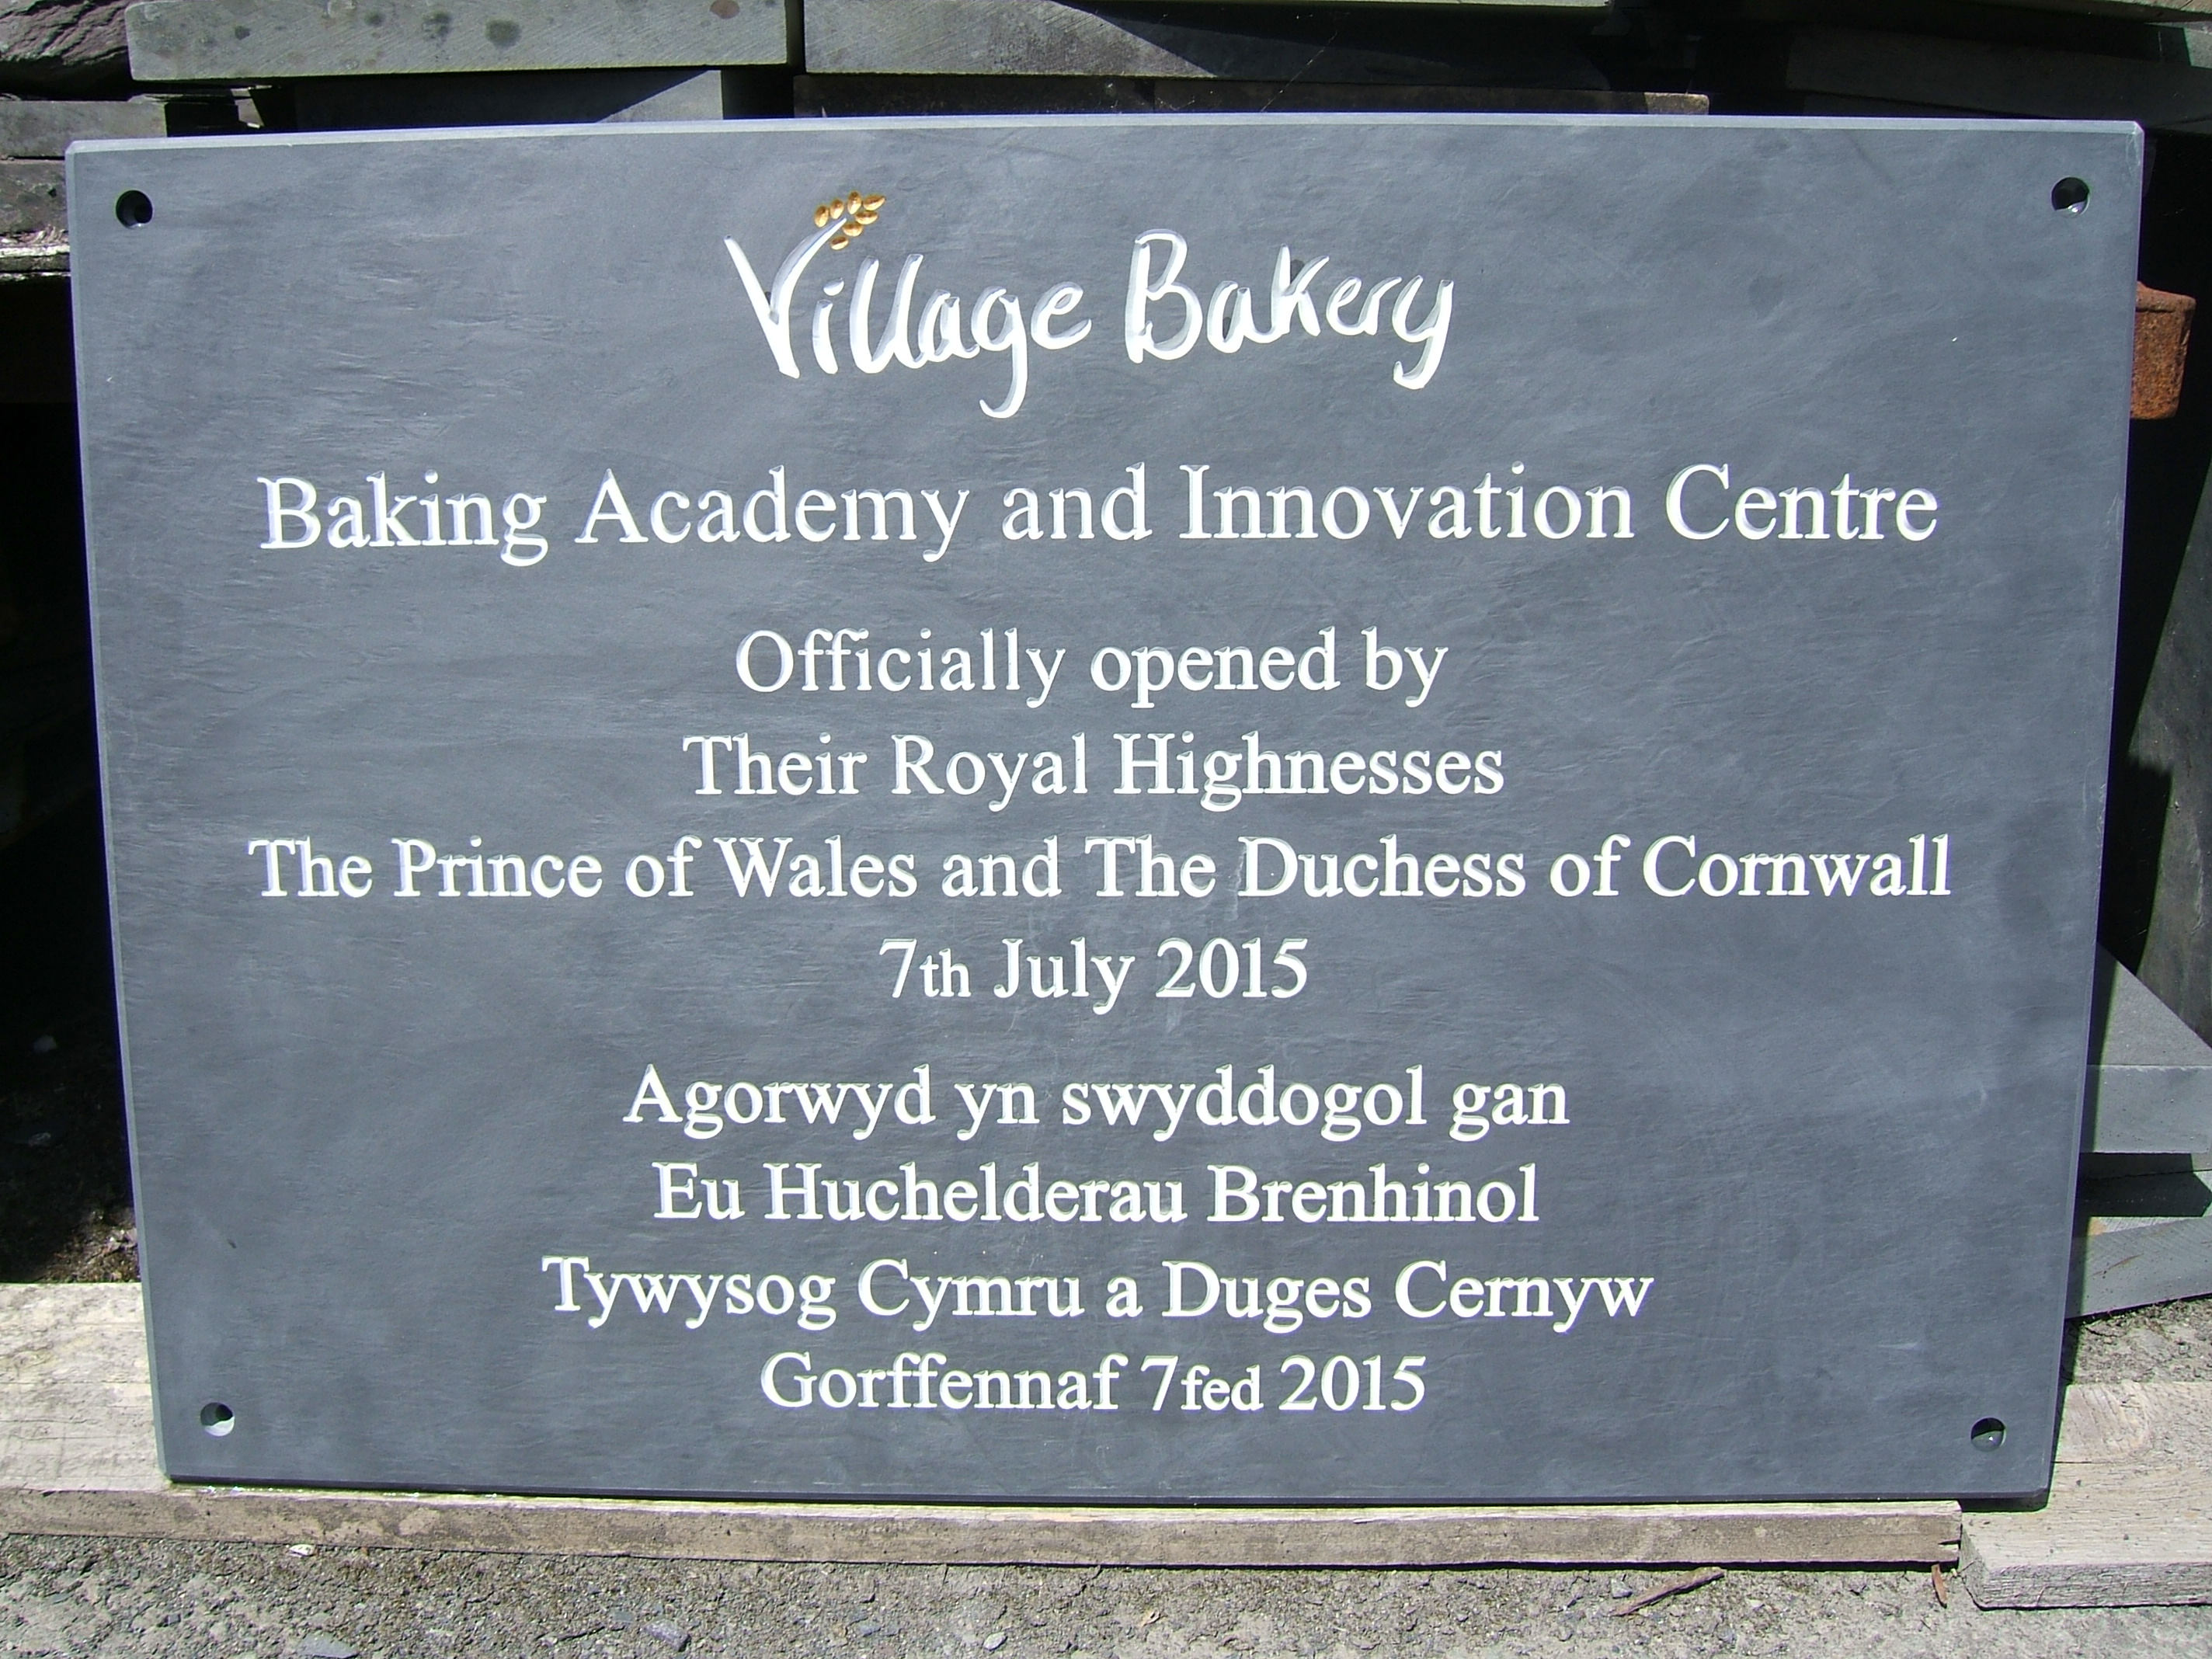 Inigo Jones supply plaque for Royal visit